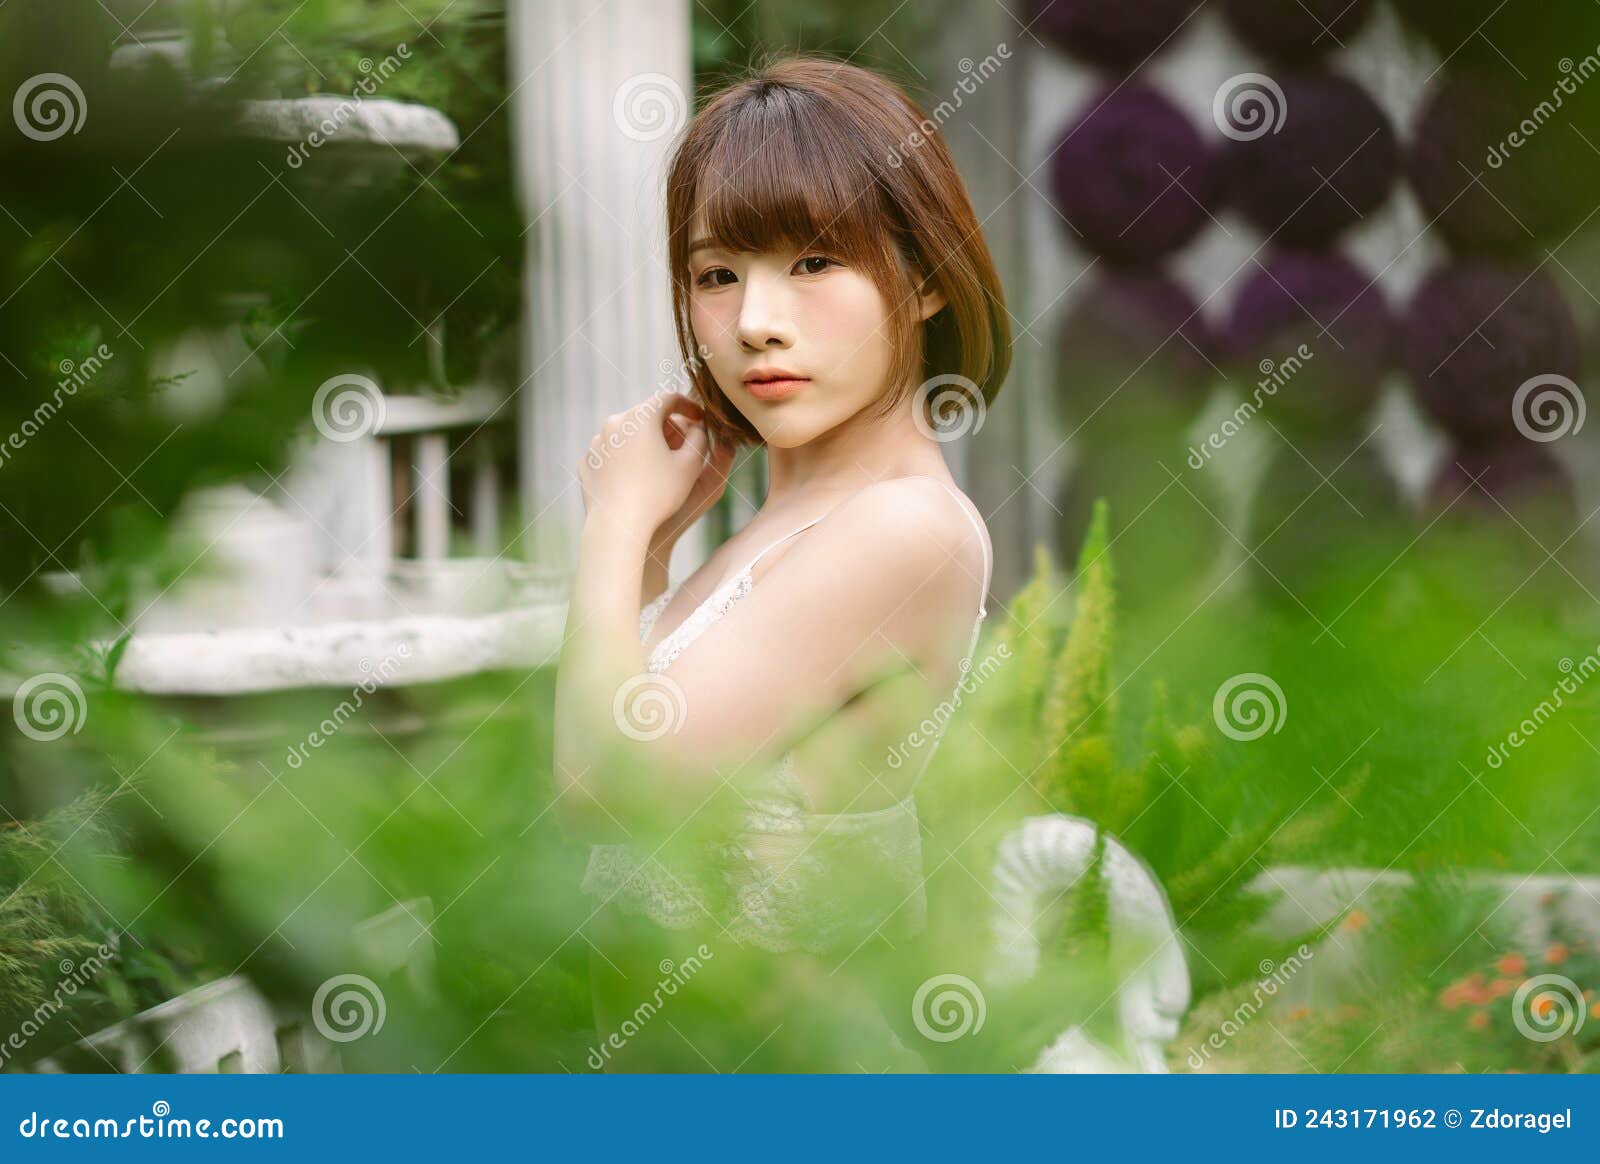 Japanese sexy girls posing on professional photographer's camera